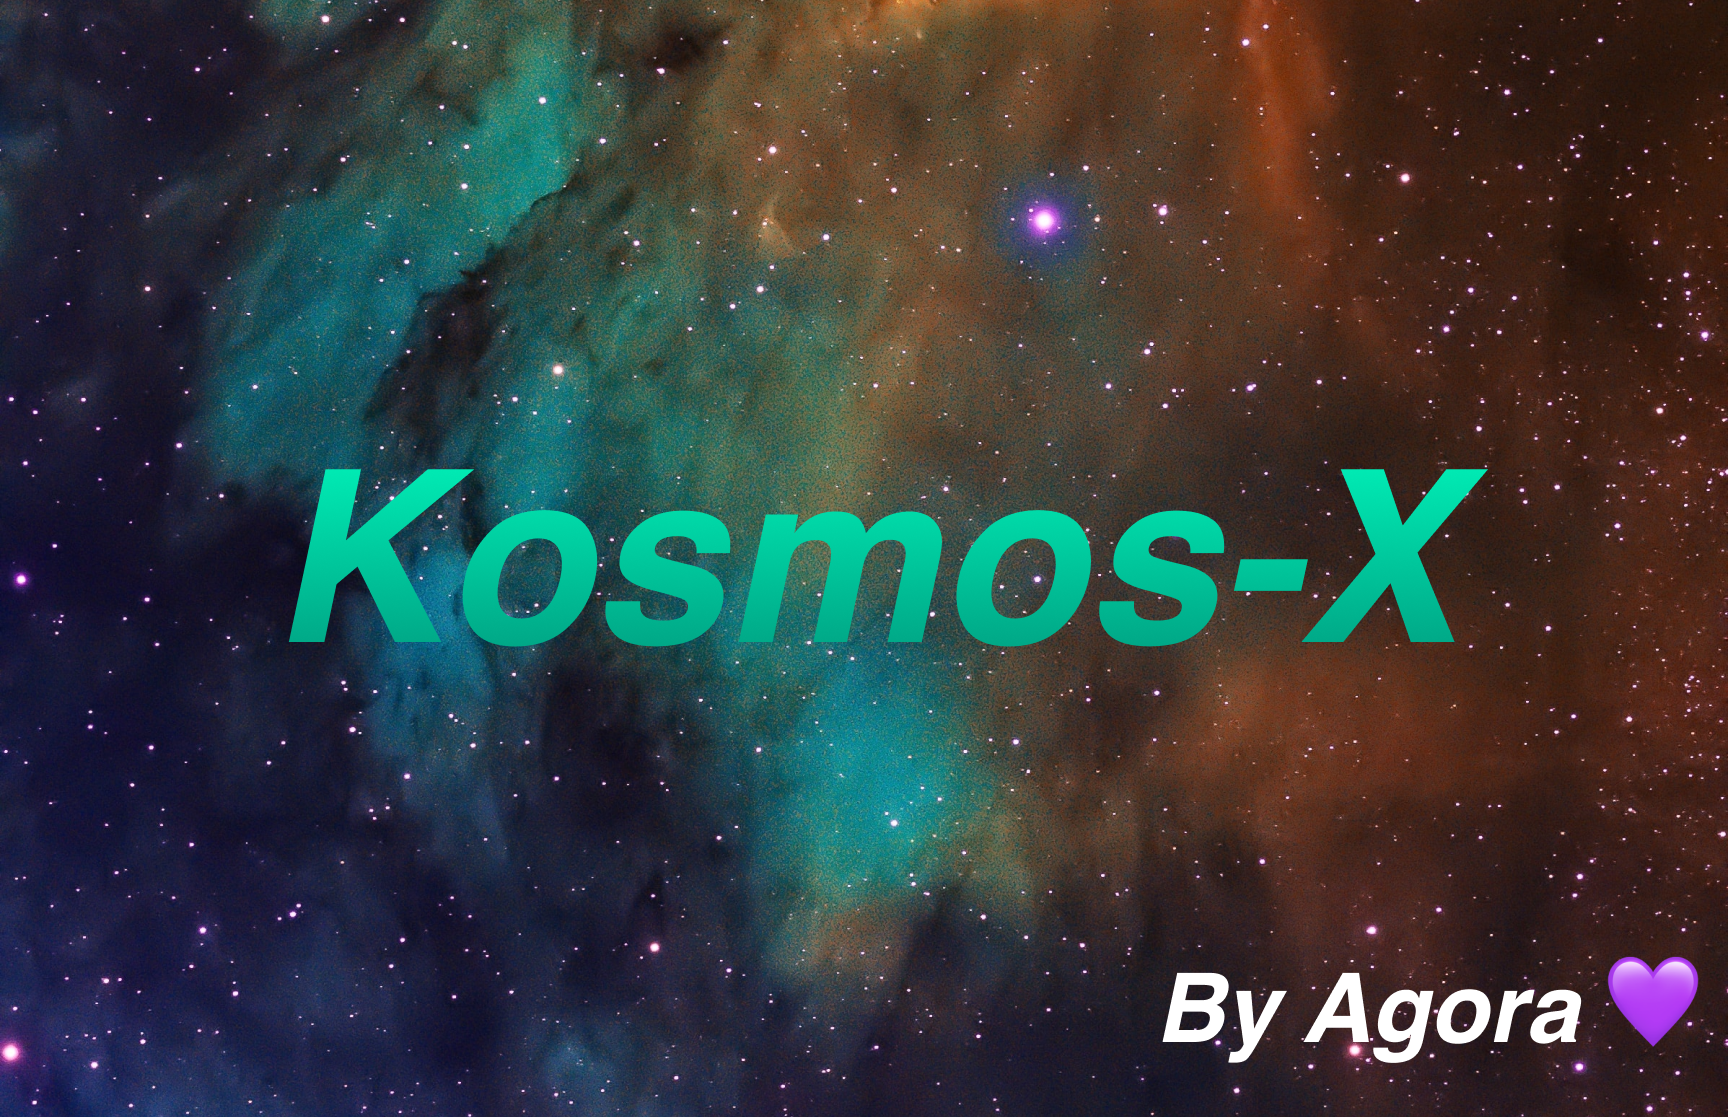 Kosmos-X